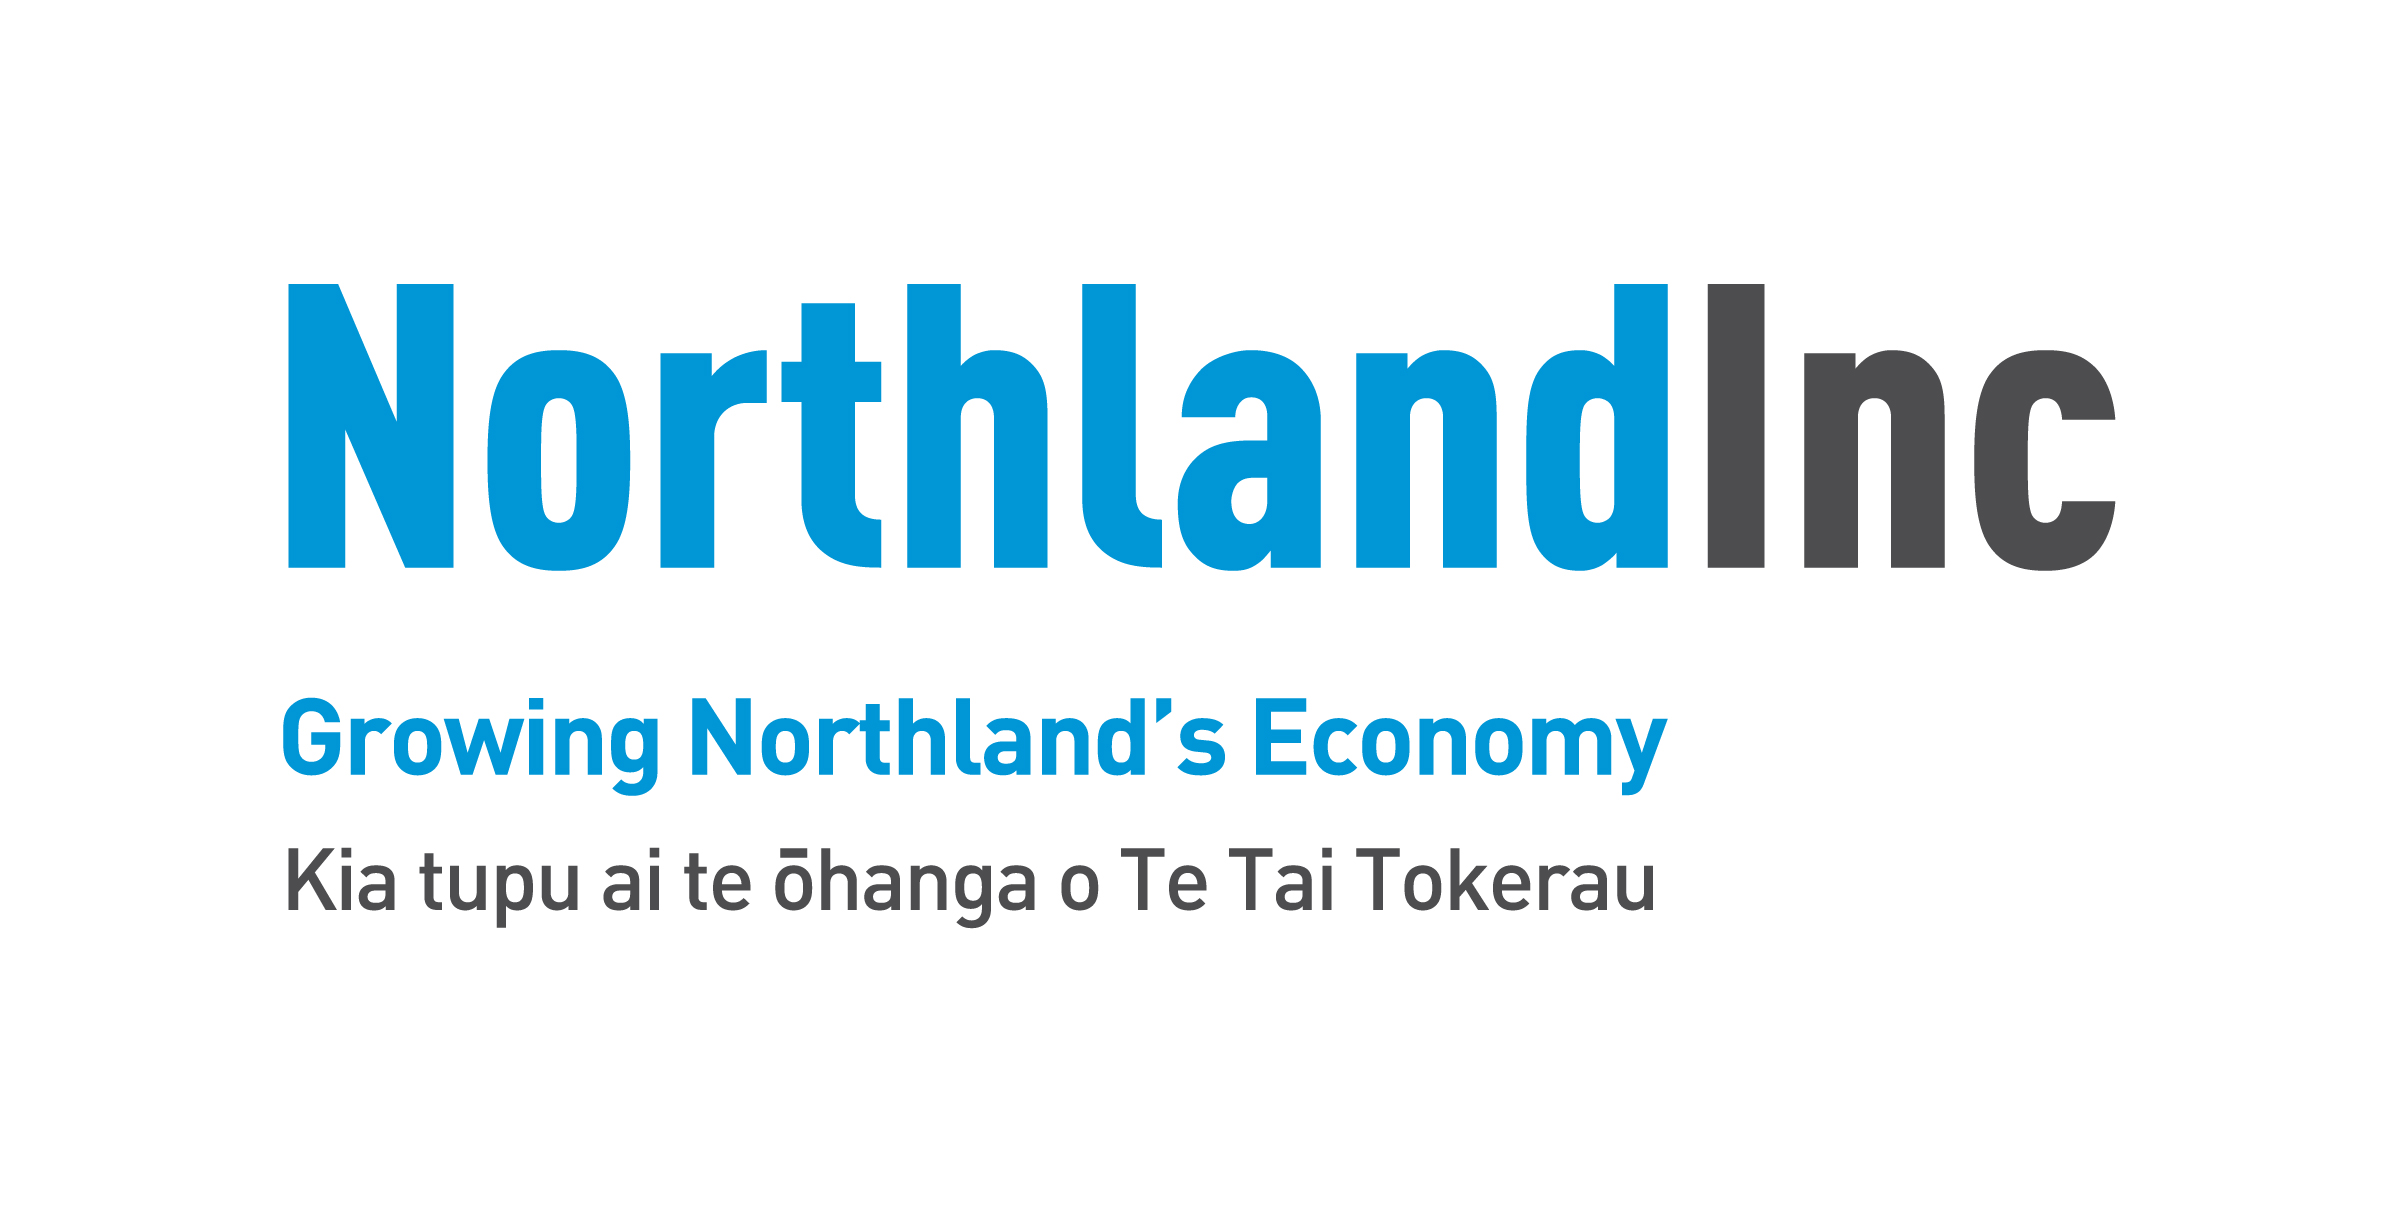 
Northland Inc